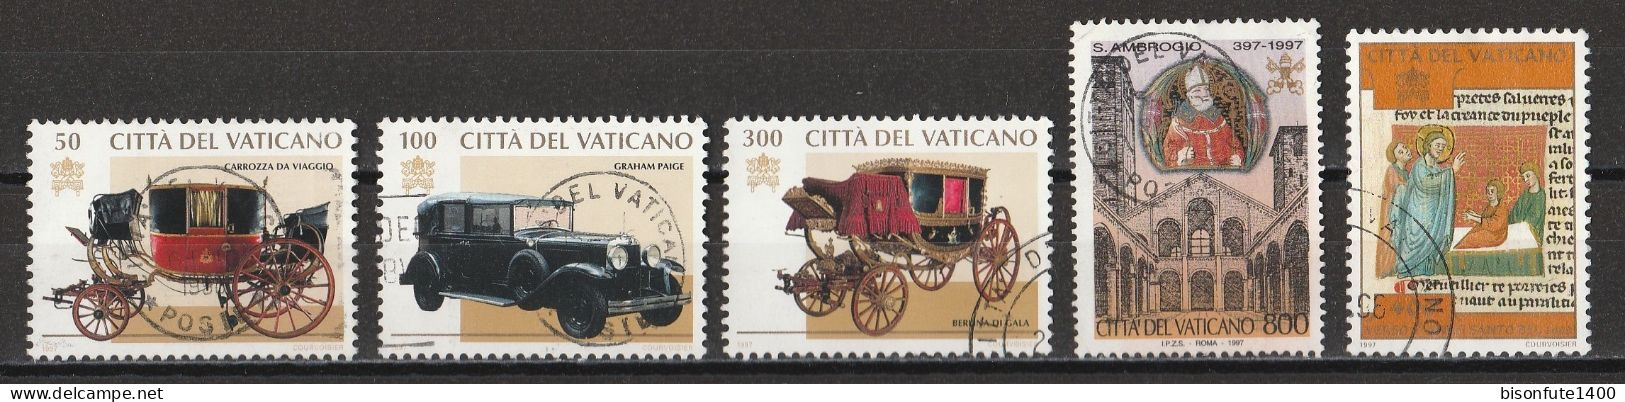 Vatican 1997 : Timbres Yvert & Tellier N° 1059 - 1060 - 1061 - 1083 - 1084 - 1089 - 1090 - 1091 - 1092 Et 1093 Oblitérés - Gebraucht